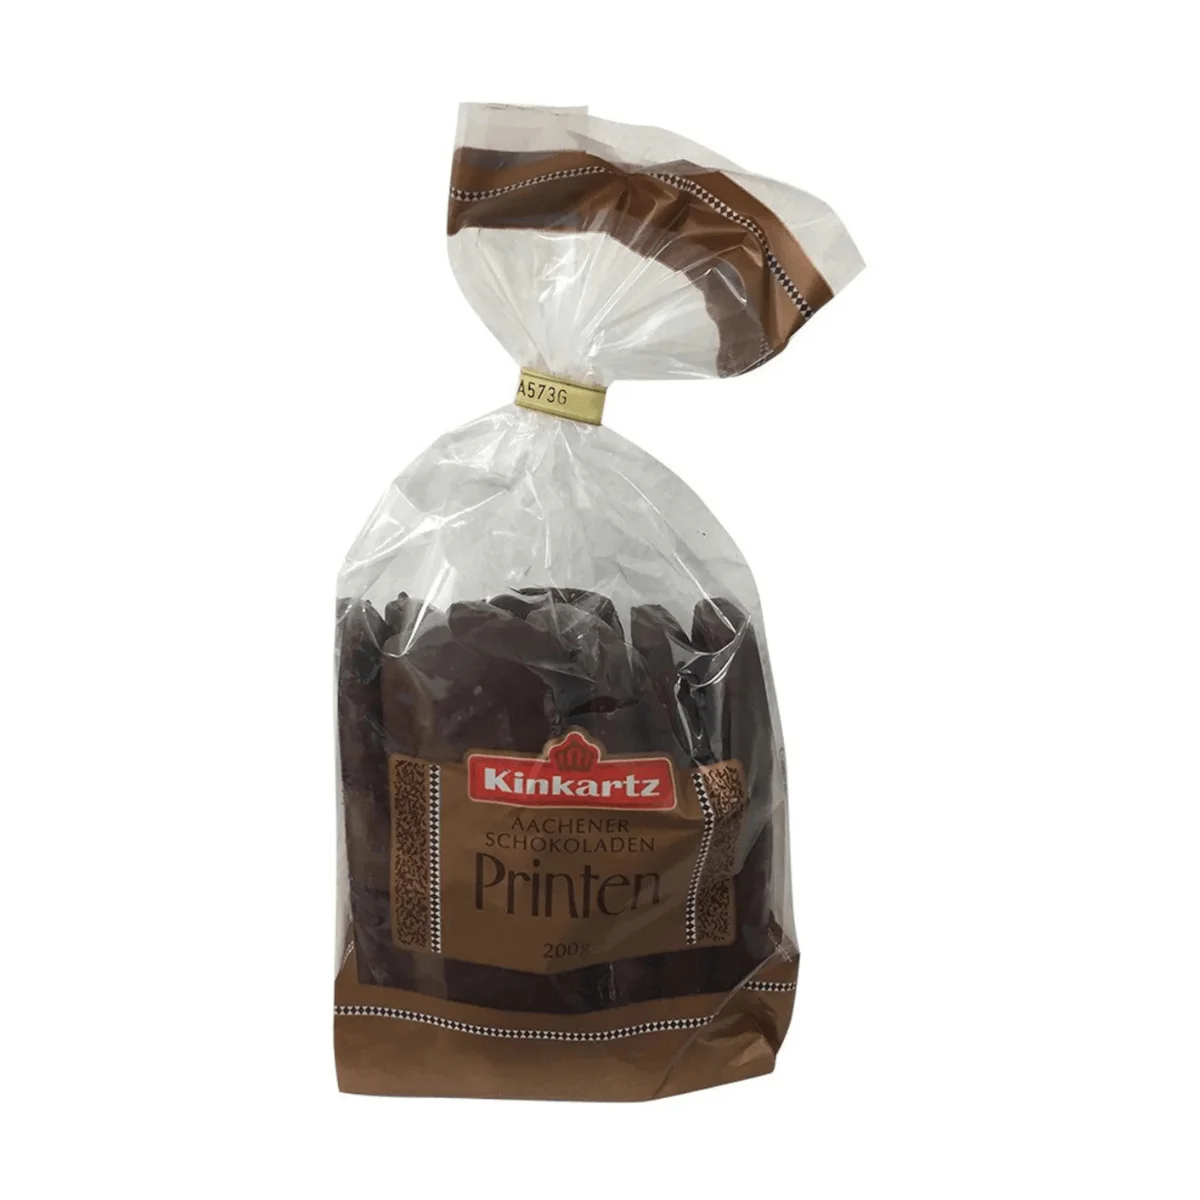 Kinkartz Aachener Schokoprinten mit Zartbitterschokolade, 200 g